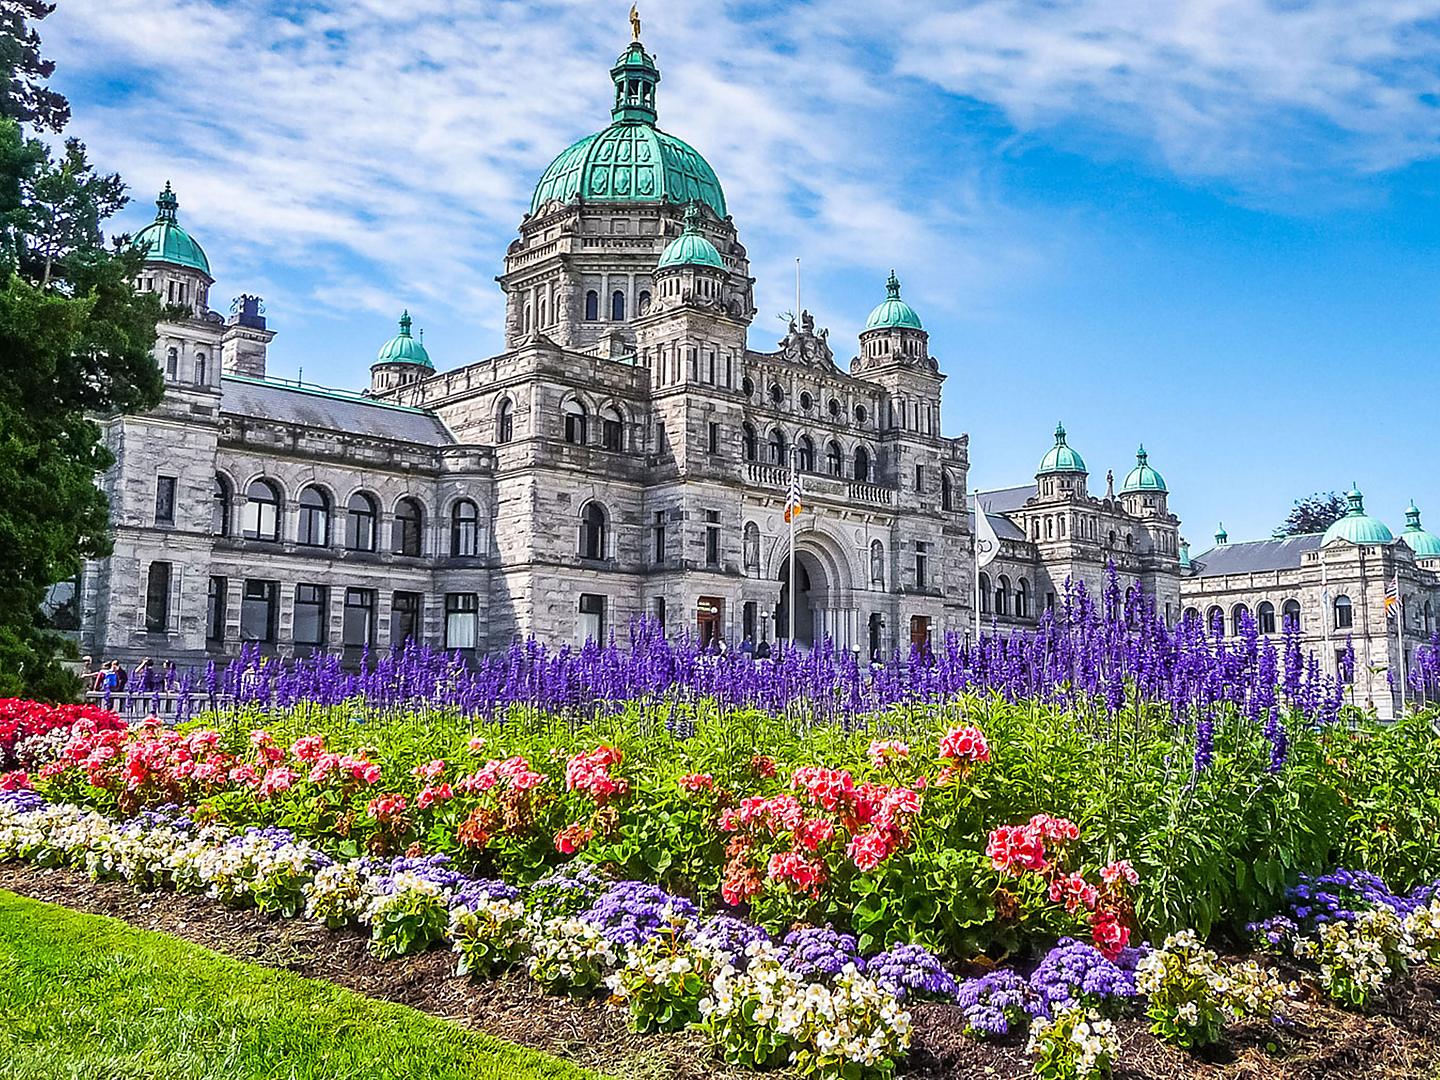 Parliament Garden, Victoria British Columbia